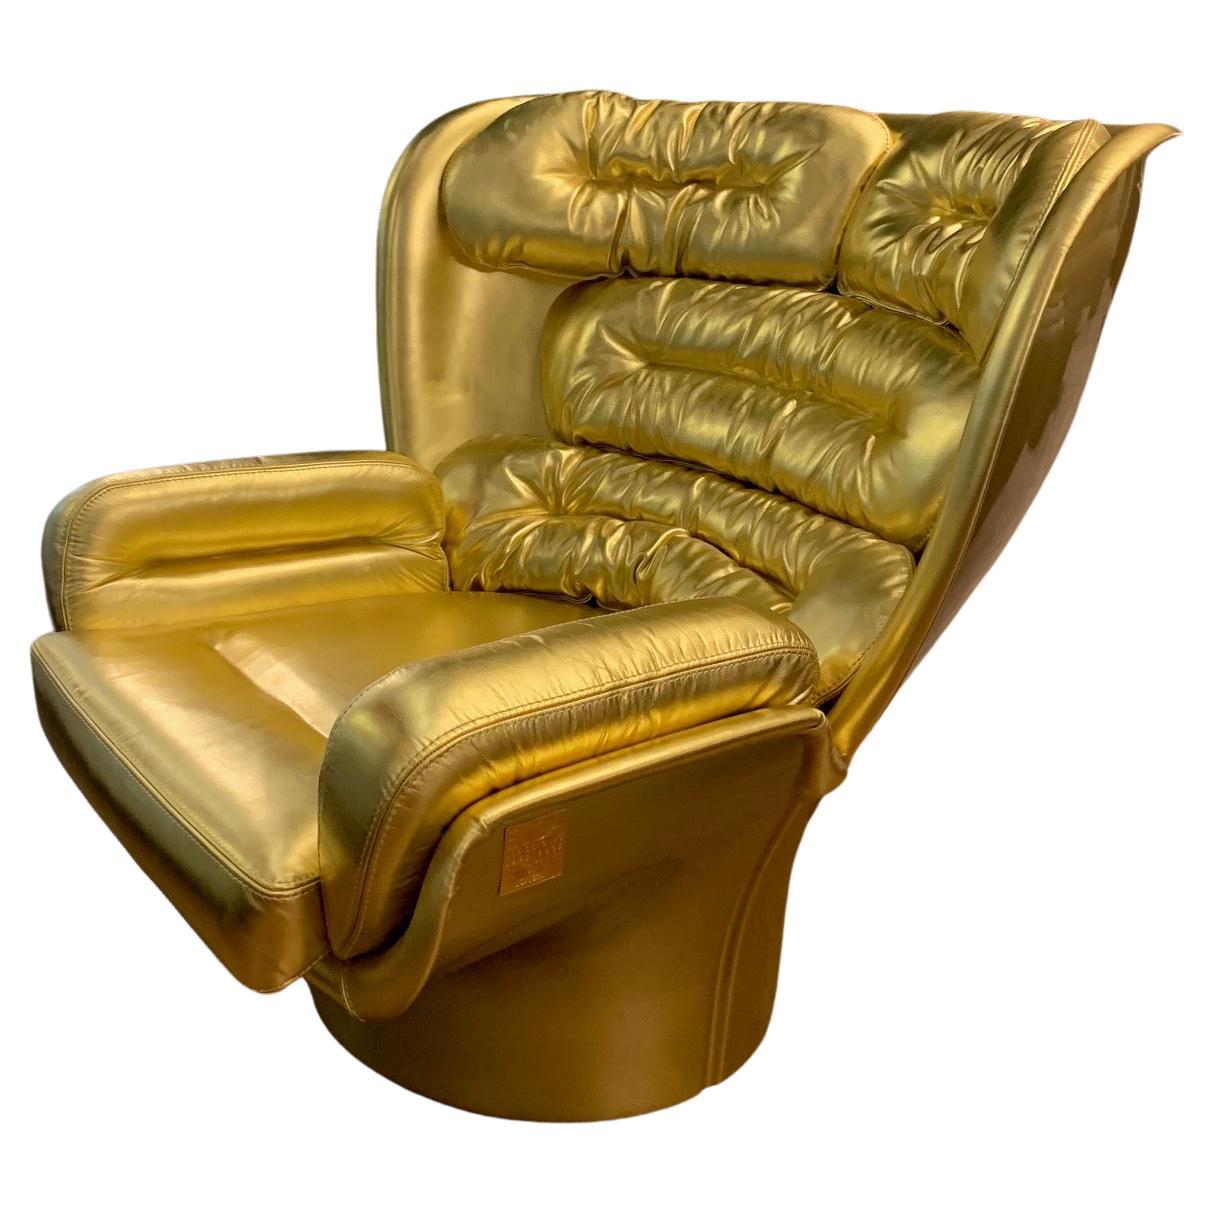 Joe Colombo Elda Chair, 60th Anniversary Limited Gold Edition 